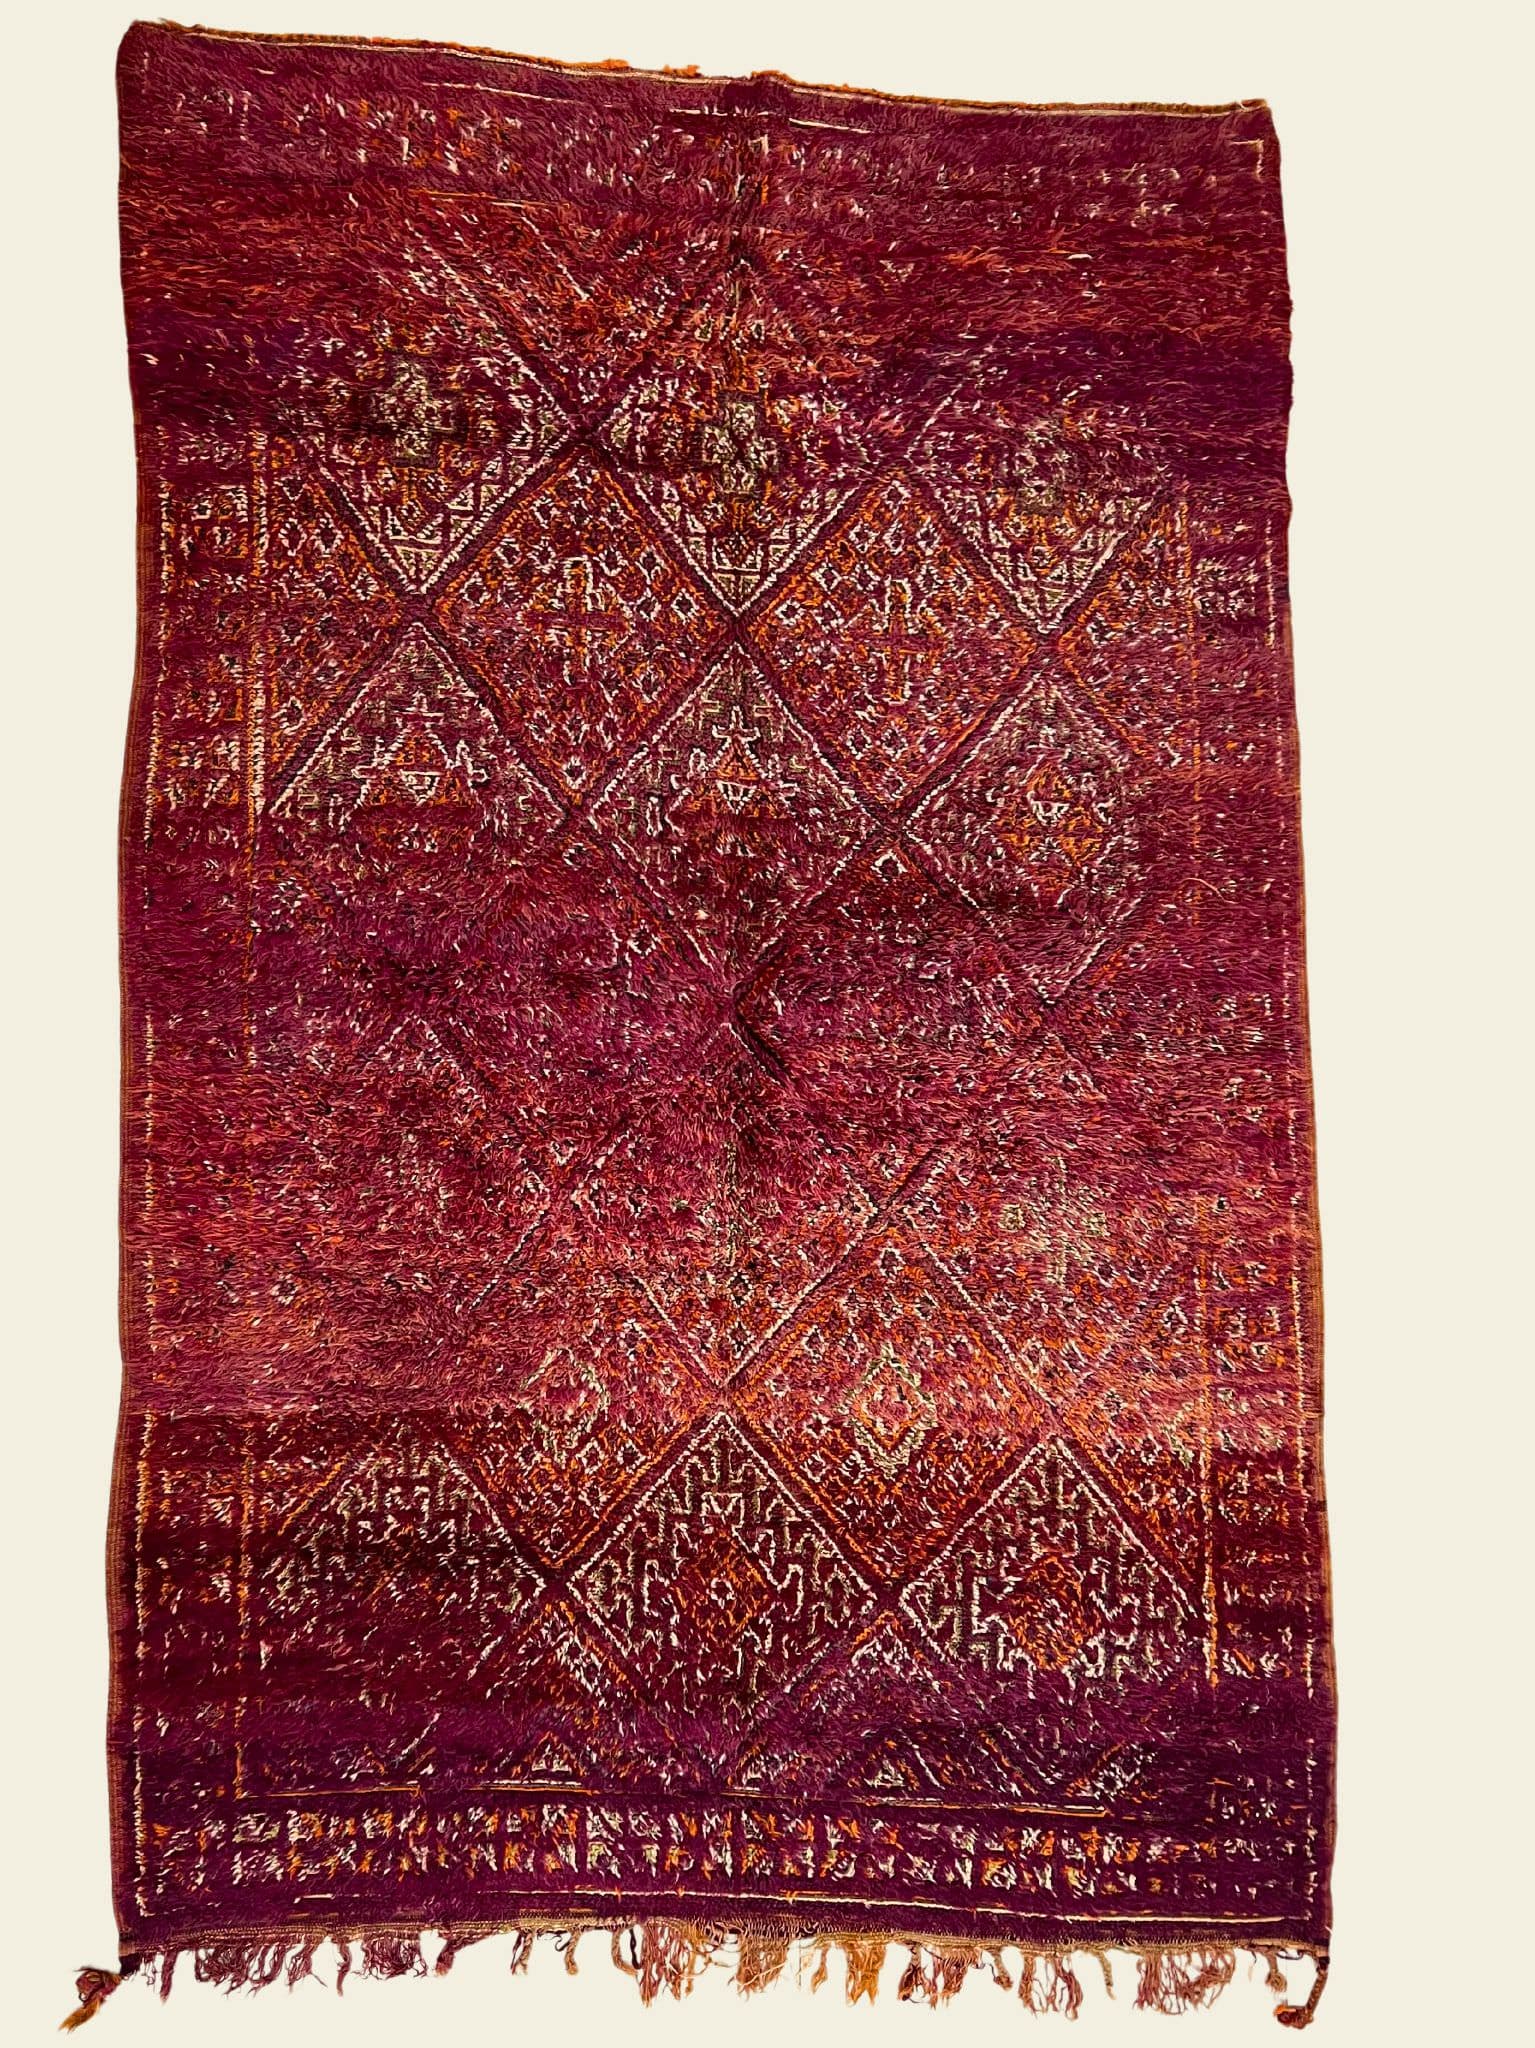 Vintage Beni Mguild Berber Rug 6'5" x 9'9" - 195 cm x 296 cm (Wool) - Dar Bouchaib Marrakech